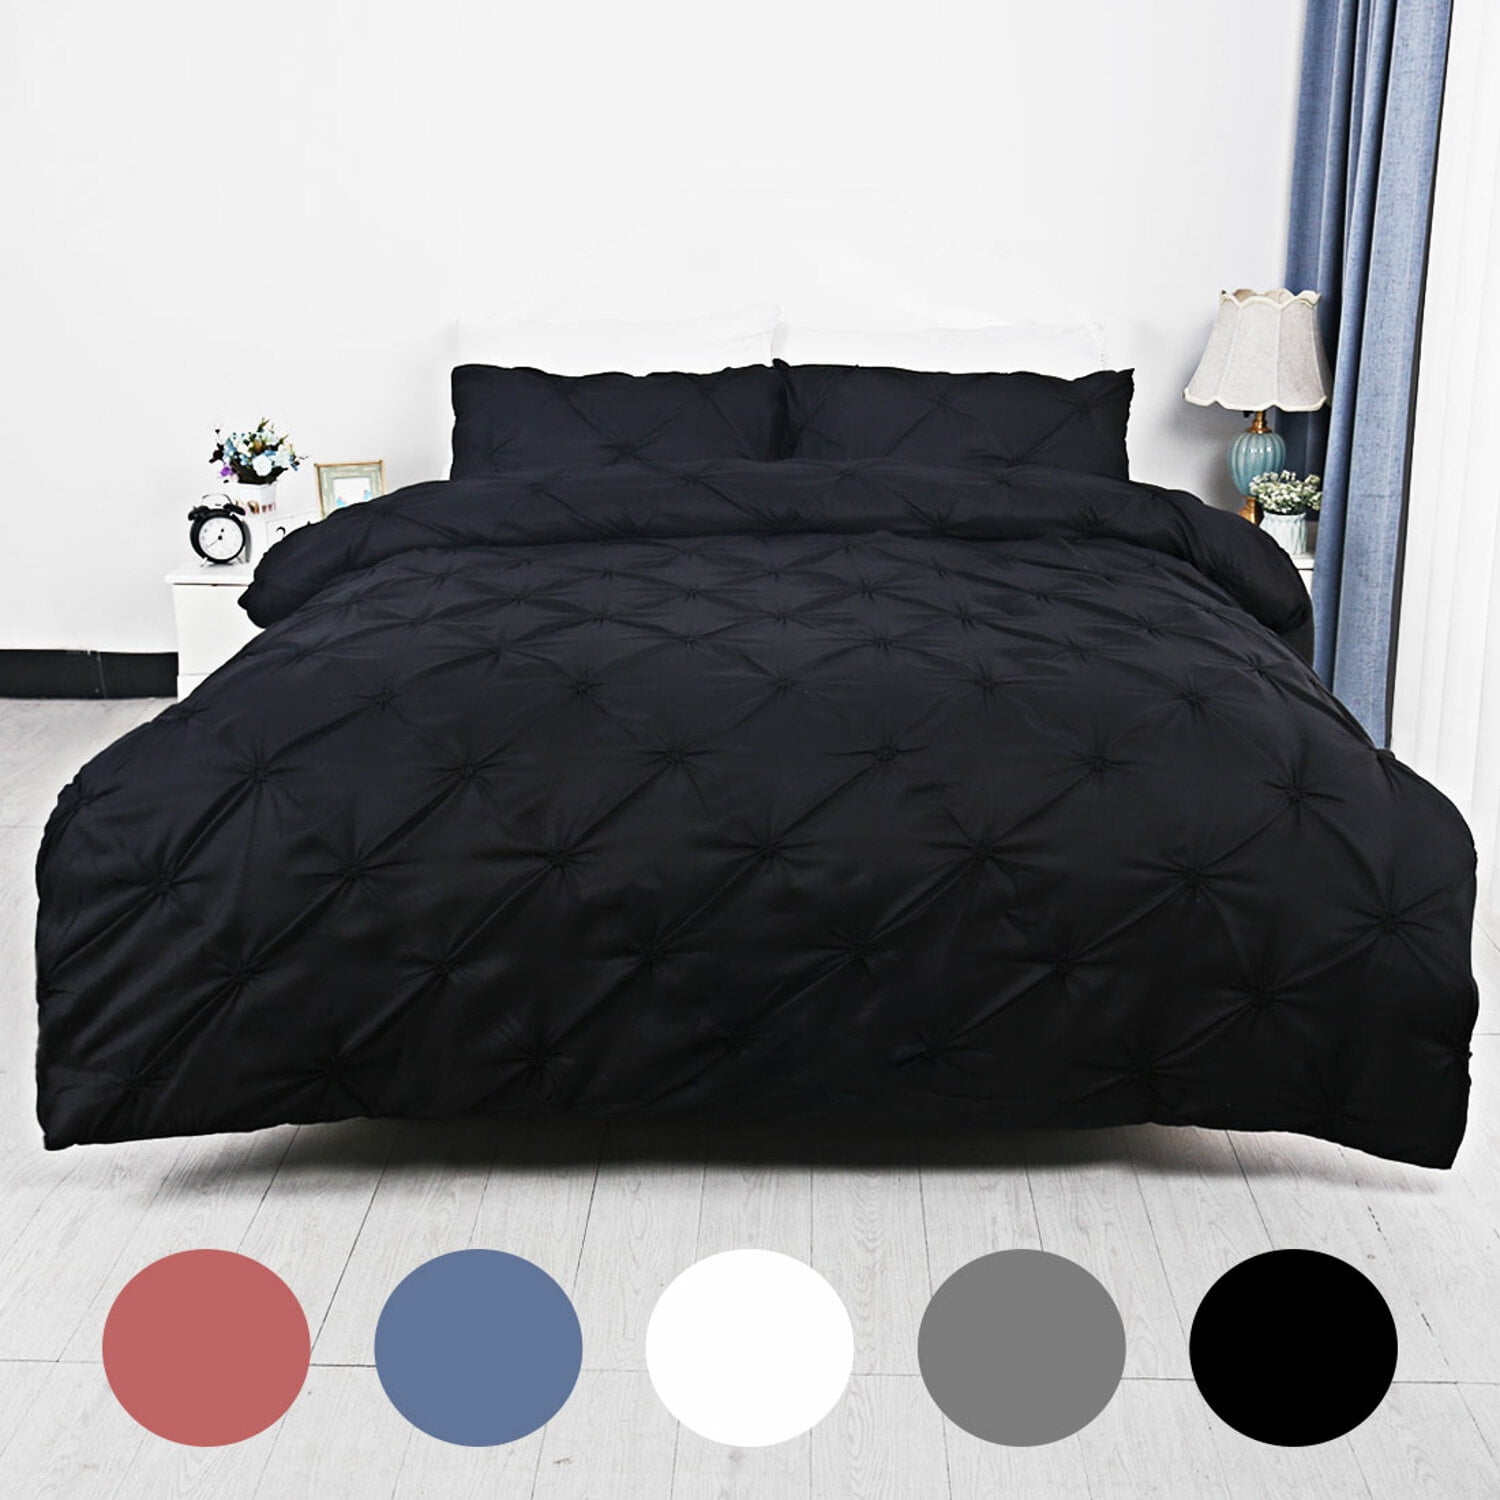 Details about   7 pc White Snow Camo Queen sheets pillowcases comforter set 